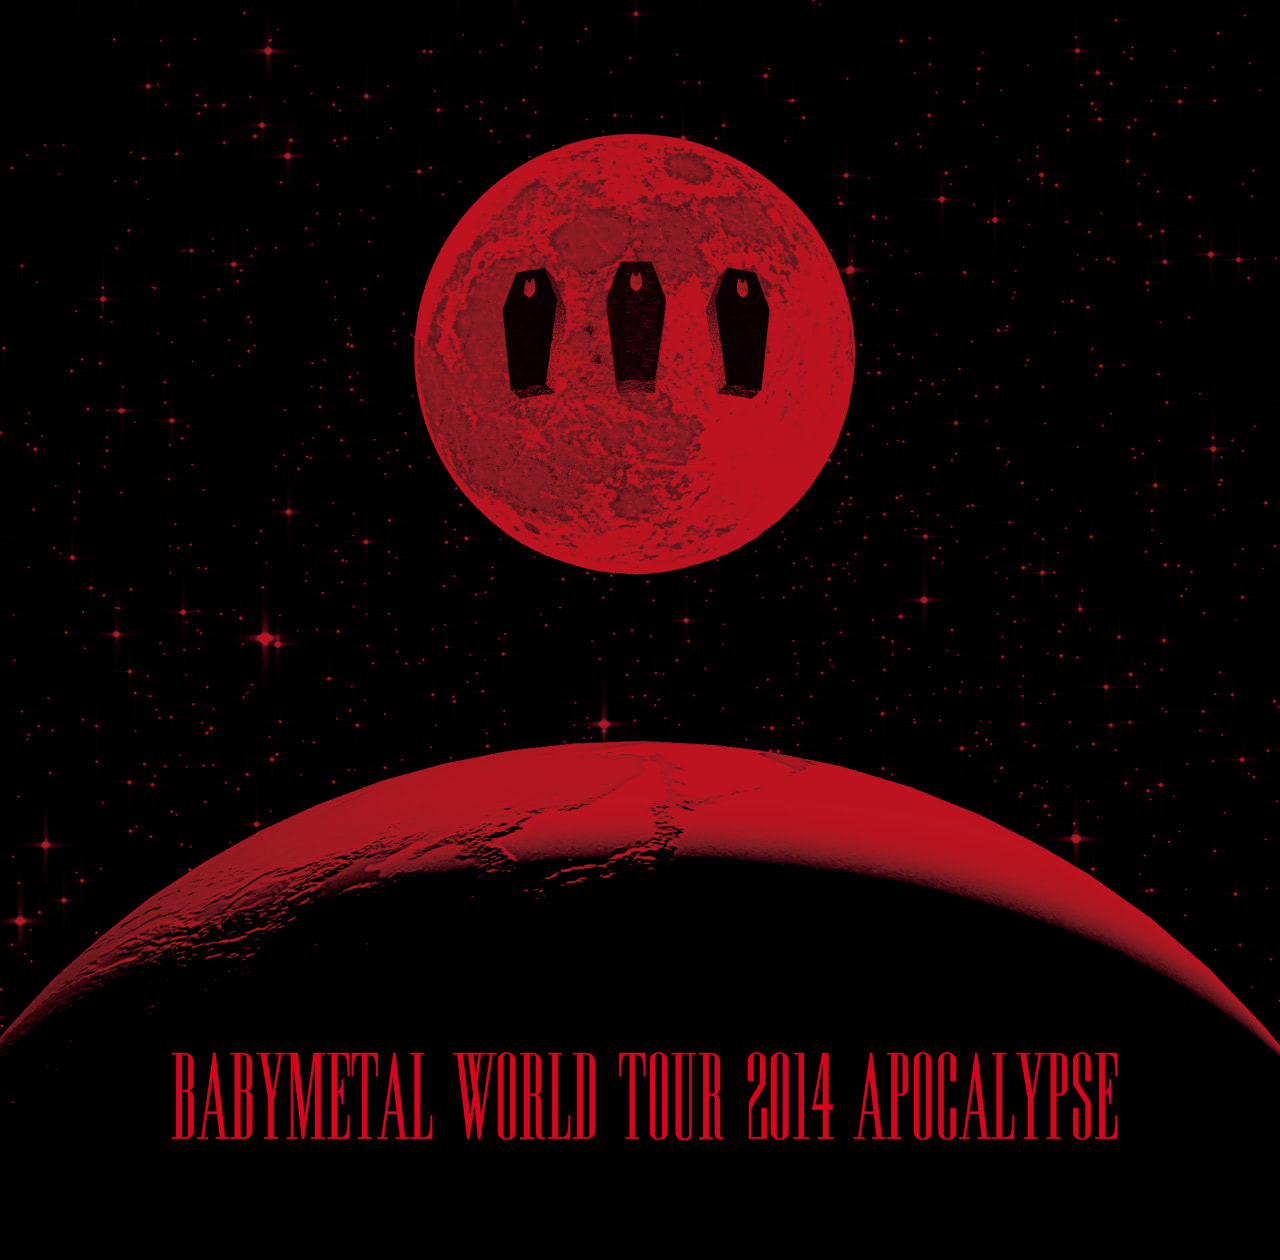 BABYMETAL WORLD TOUR 2014 APOCALYPSEBABYMETAL